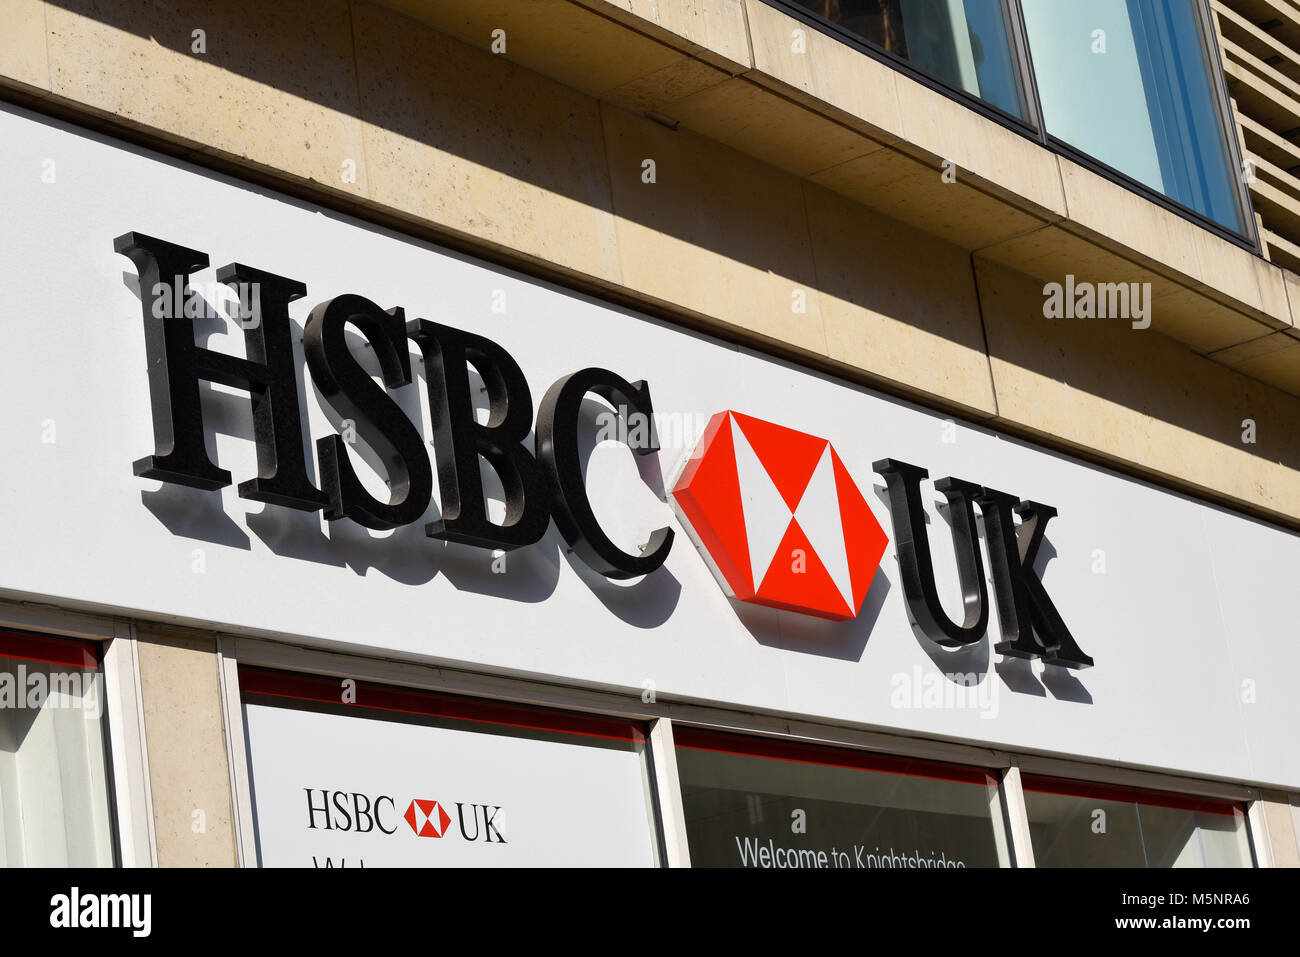 HSBC UK high street bank logo sign, Brompton Road, Knightsbridge, London, UK. Banking sector Stock Photo